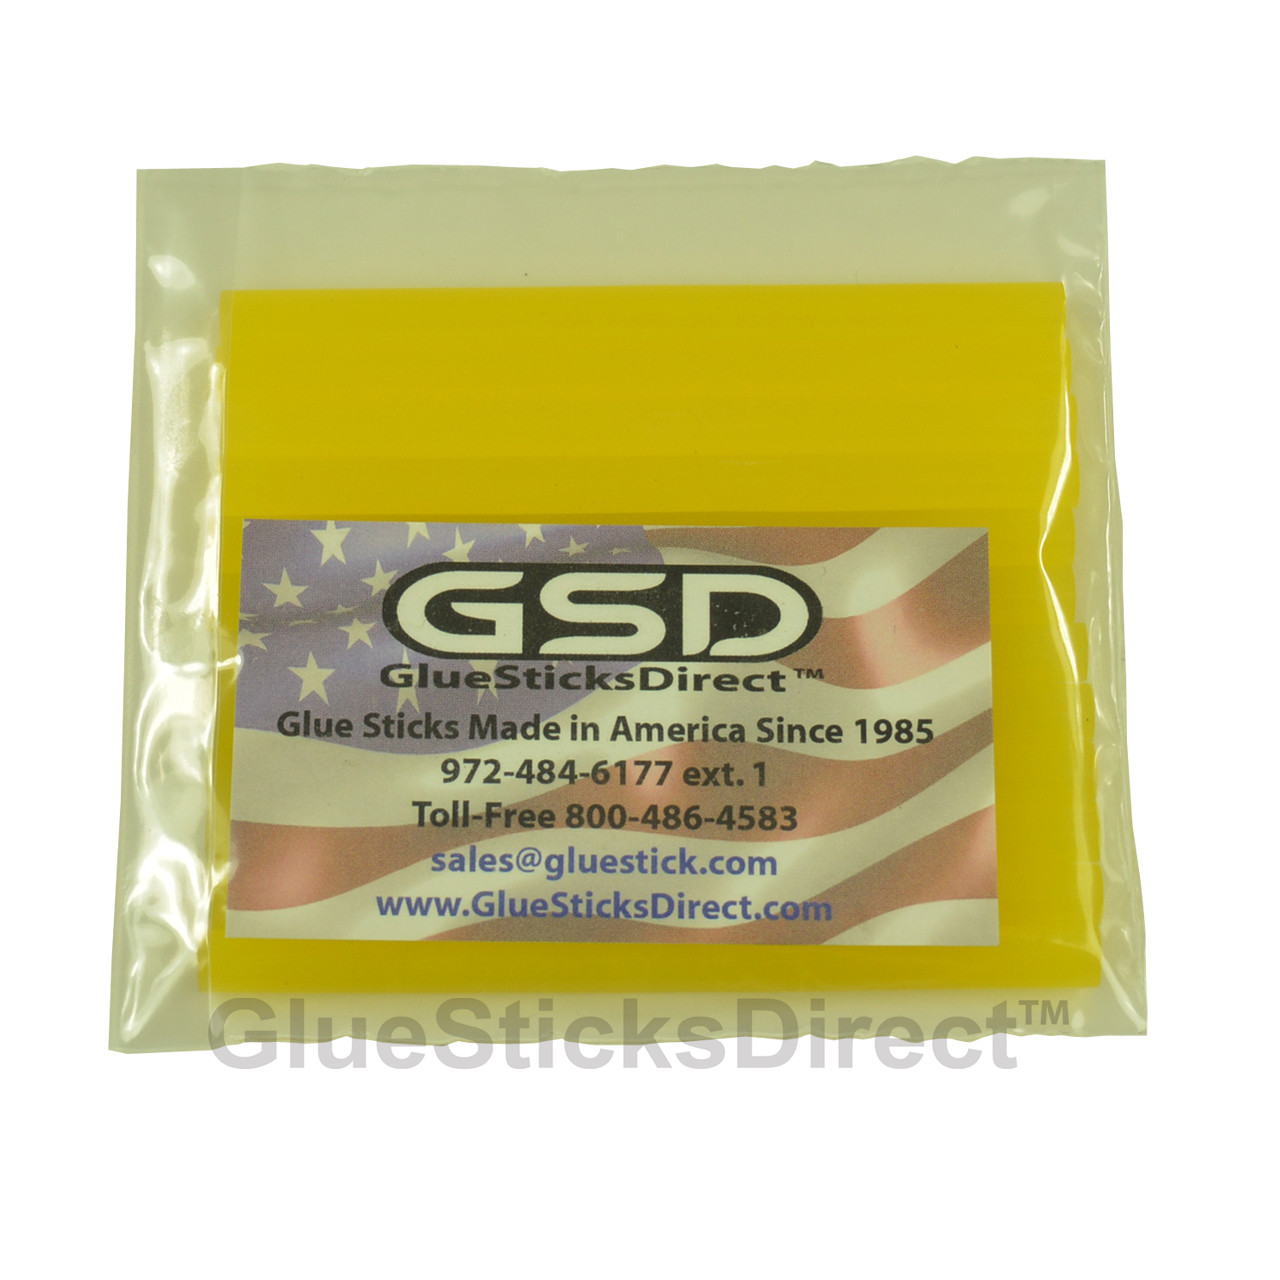 GlueSticksDirect Translucent Yellow Colored Glue Sticks Mini X 4" 24 Sticks